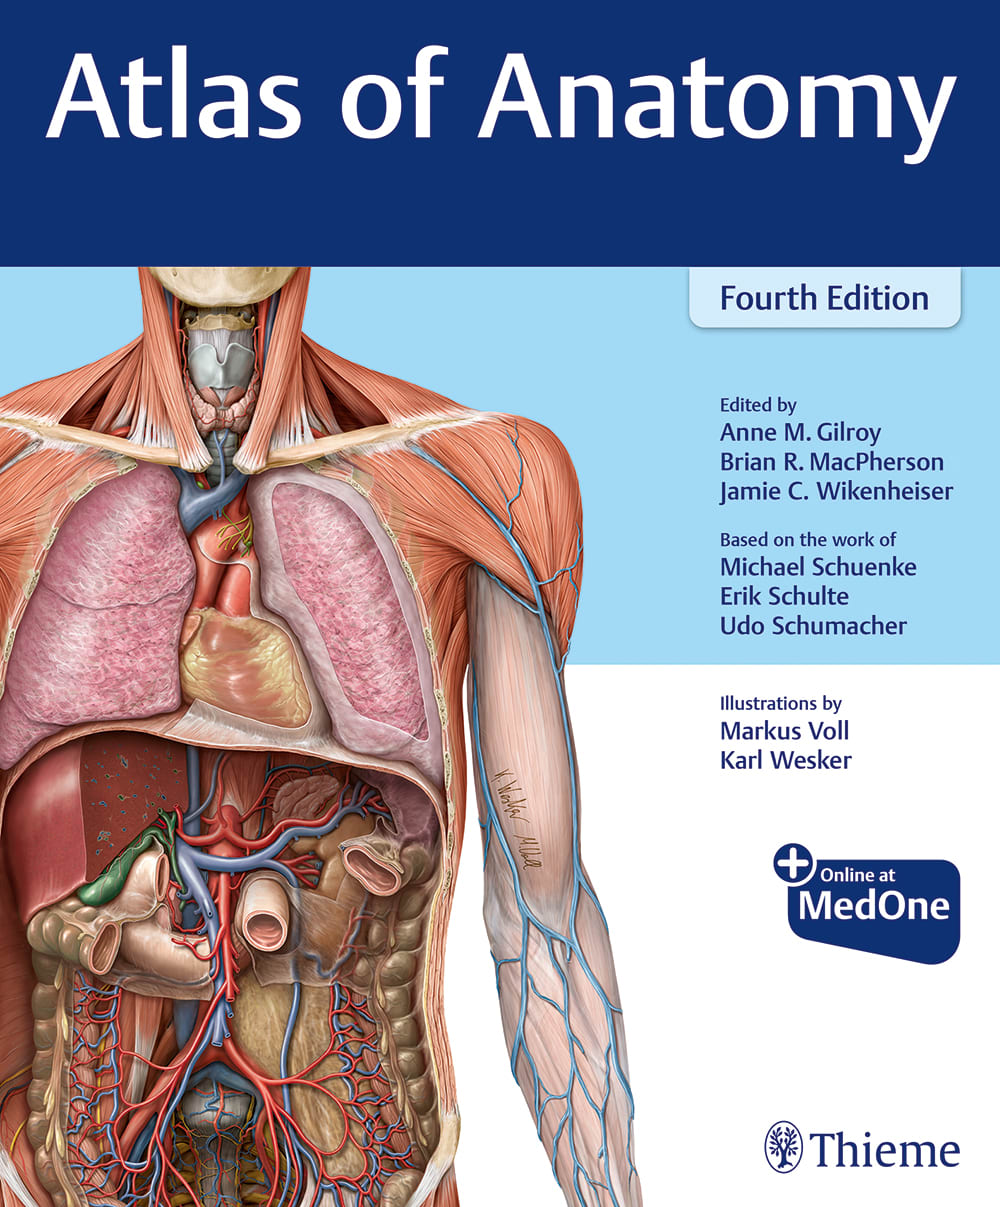 atlas of anatomy 4th edition anne m gilroy, brian r macpherson, brian macpherson, jamie wikenheiser, michael